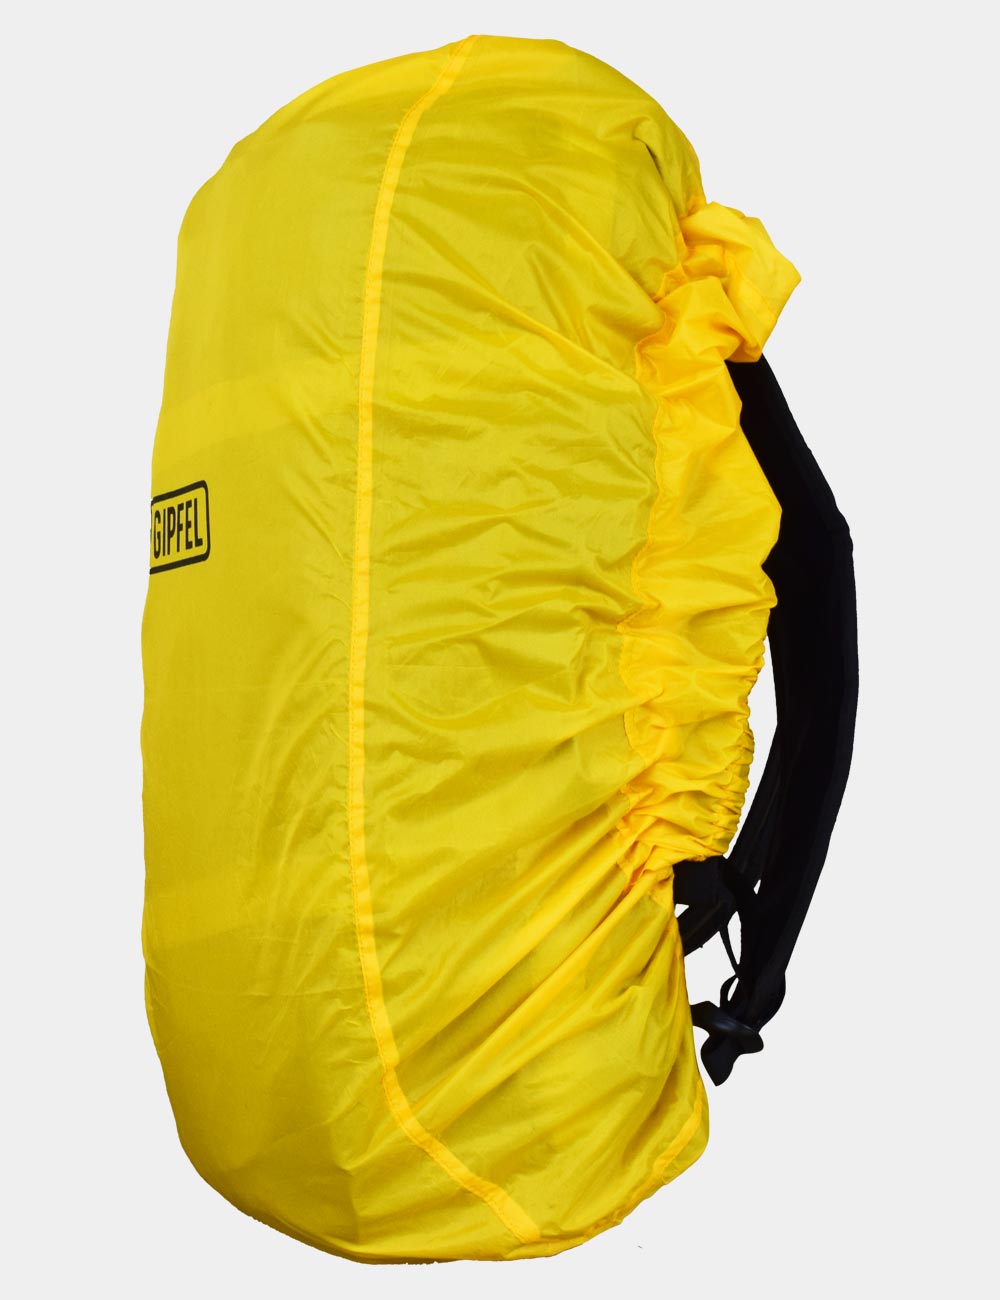 Backpack/ Rucksack Rain Cover 40L